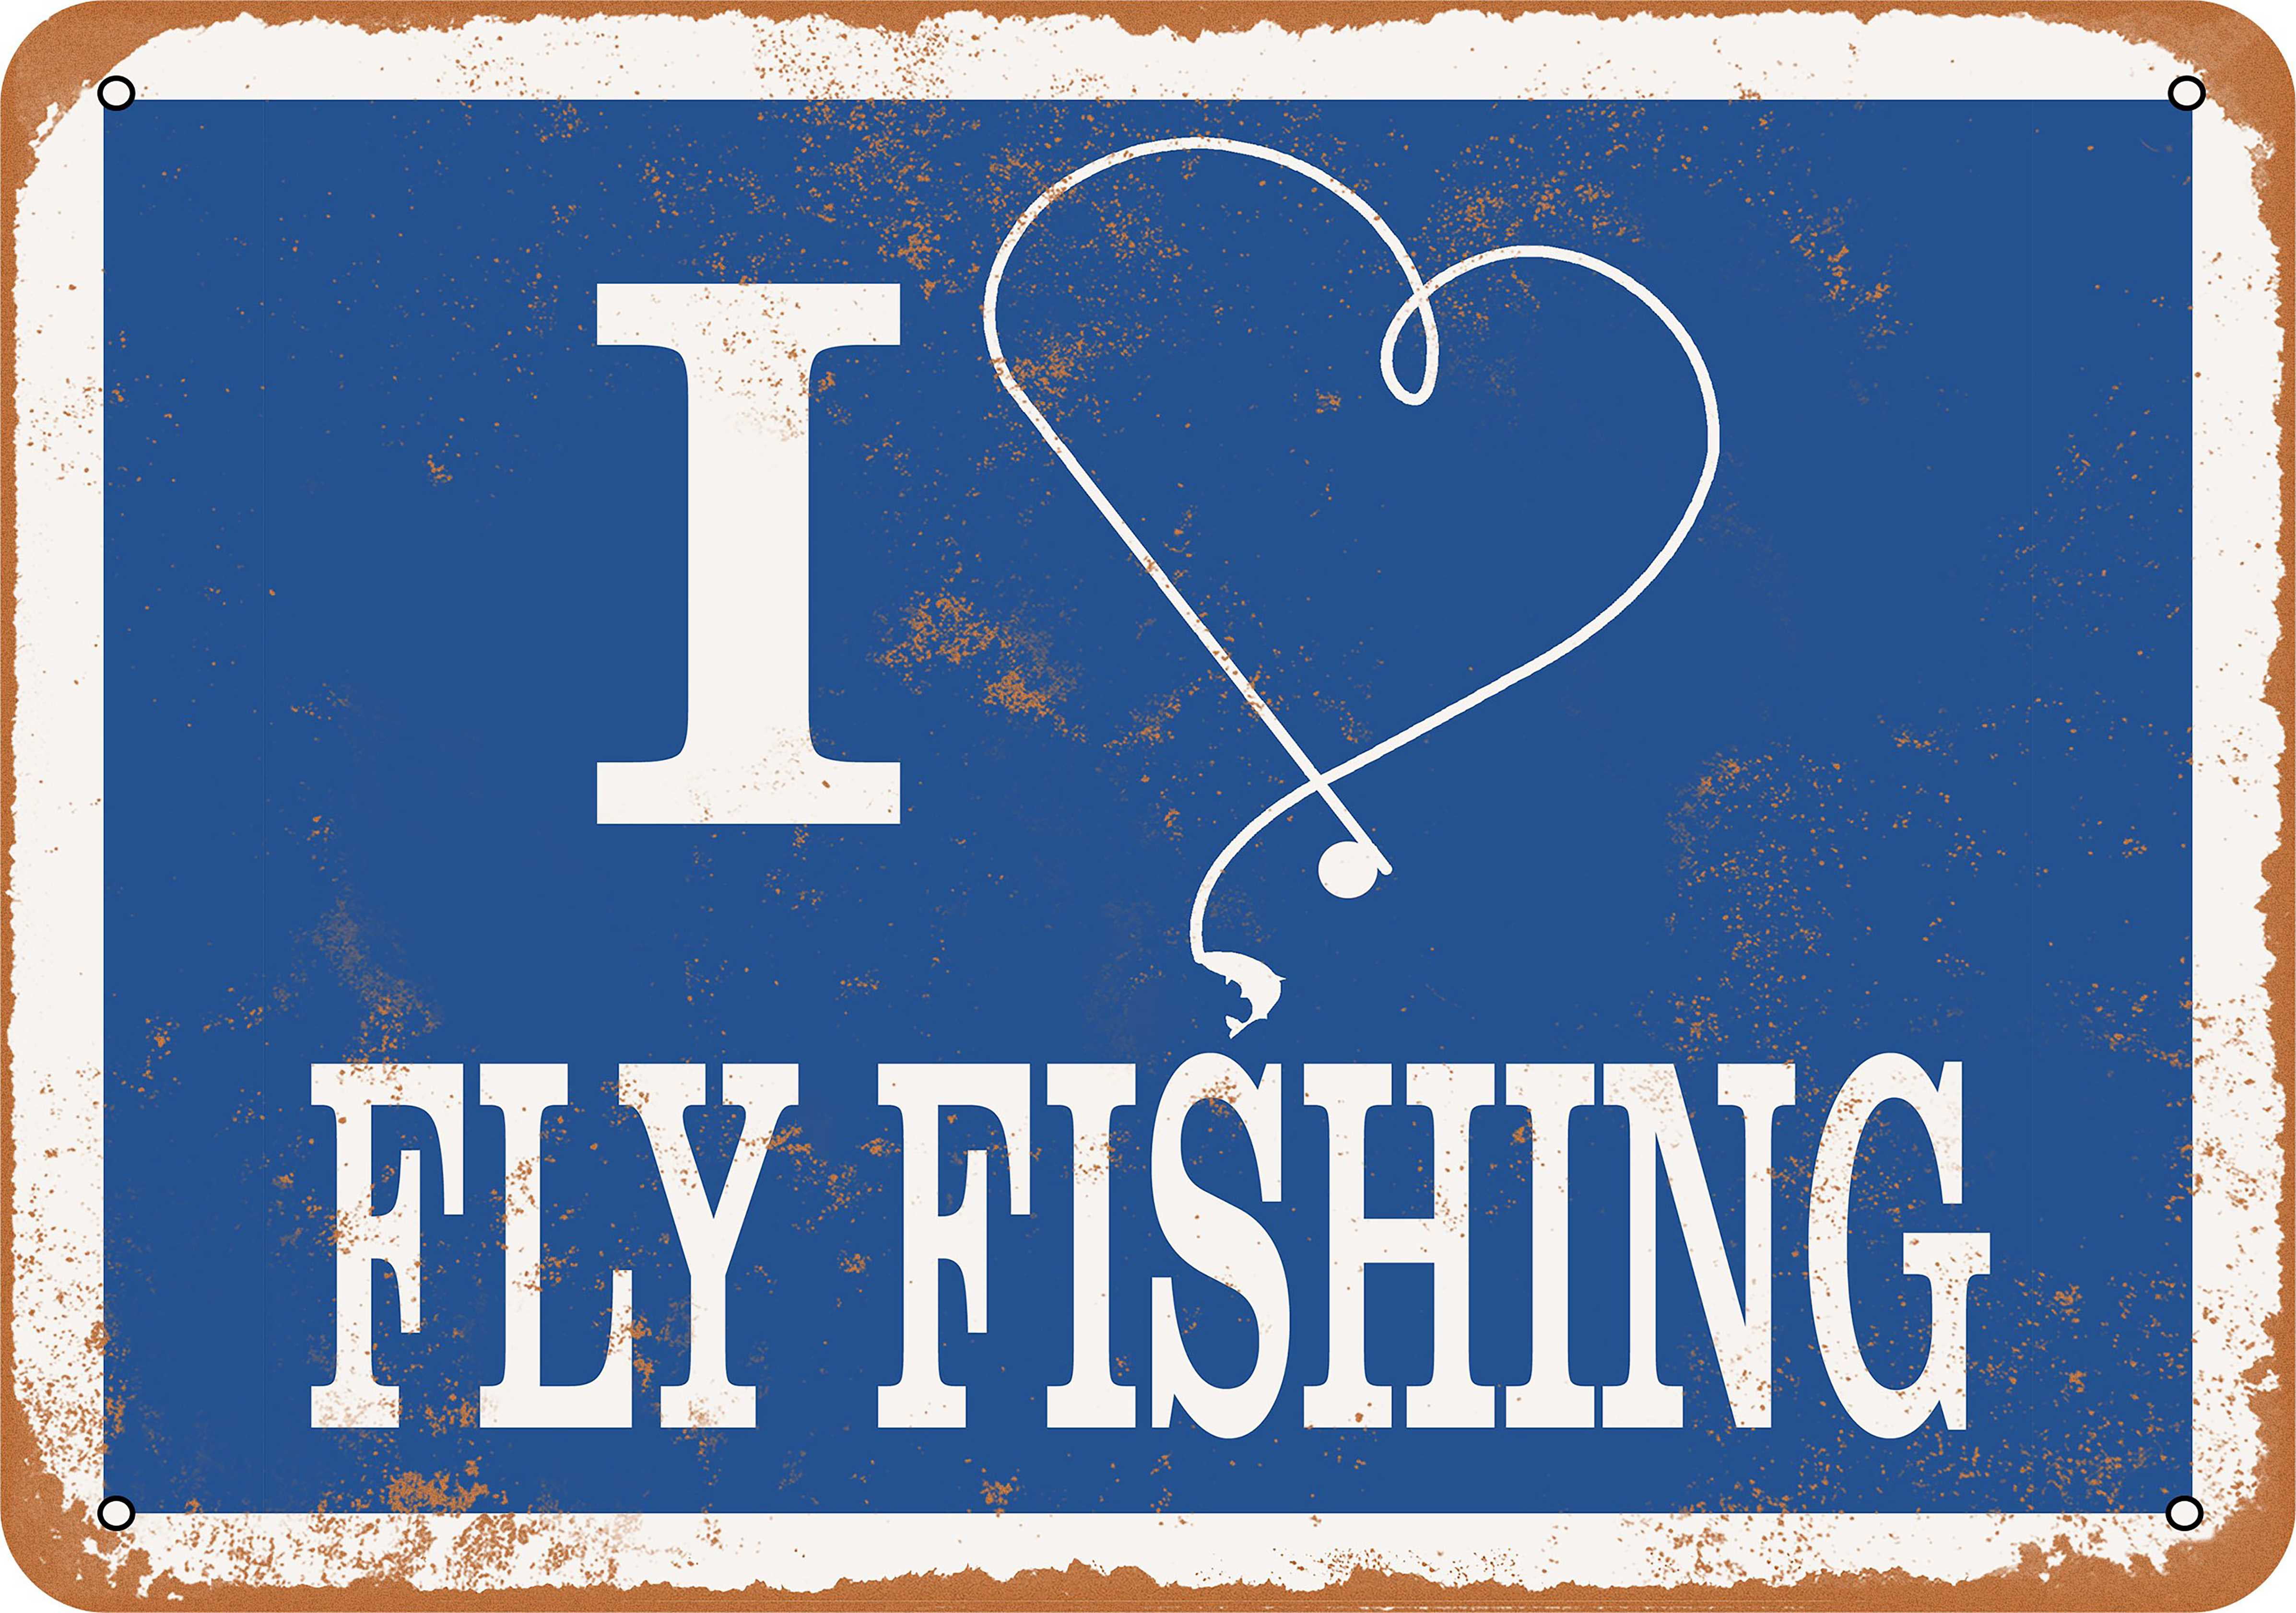 I Love Fly Fishing Metal Sign - 9x12 inch - Vintage Look - Walmart.com